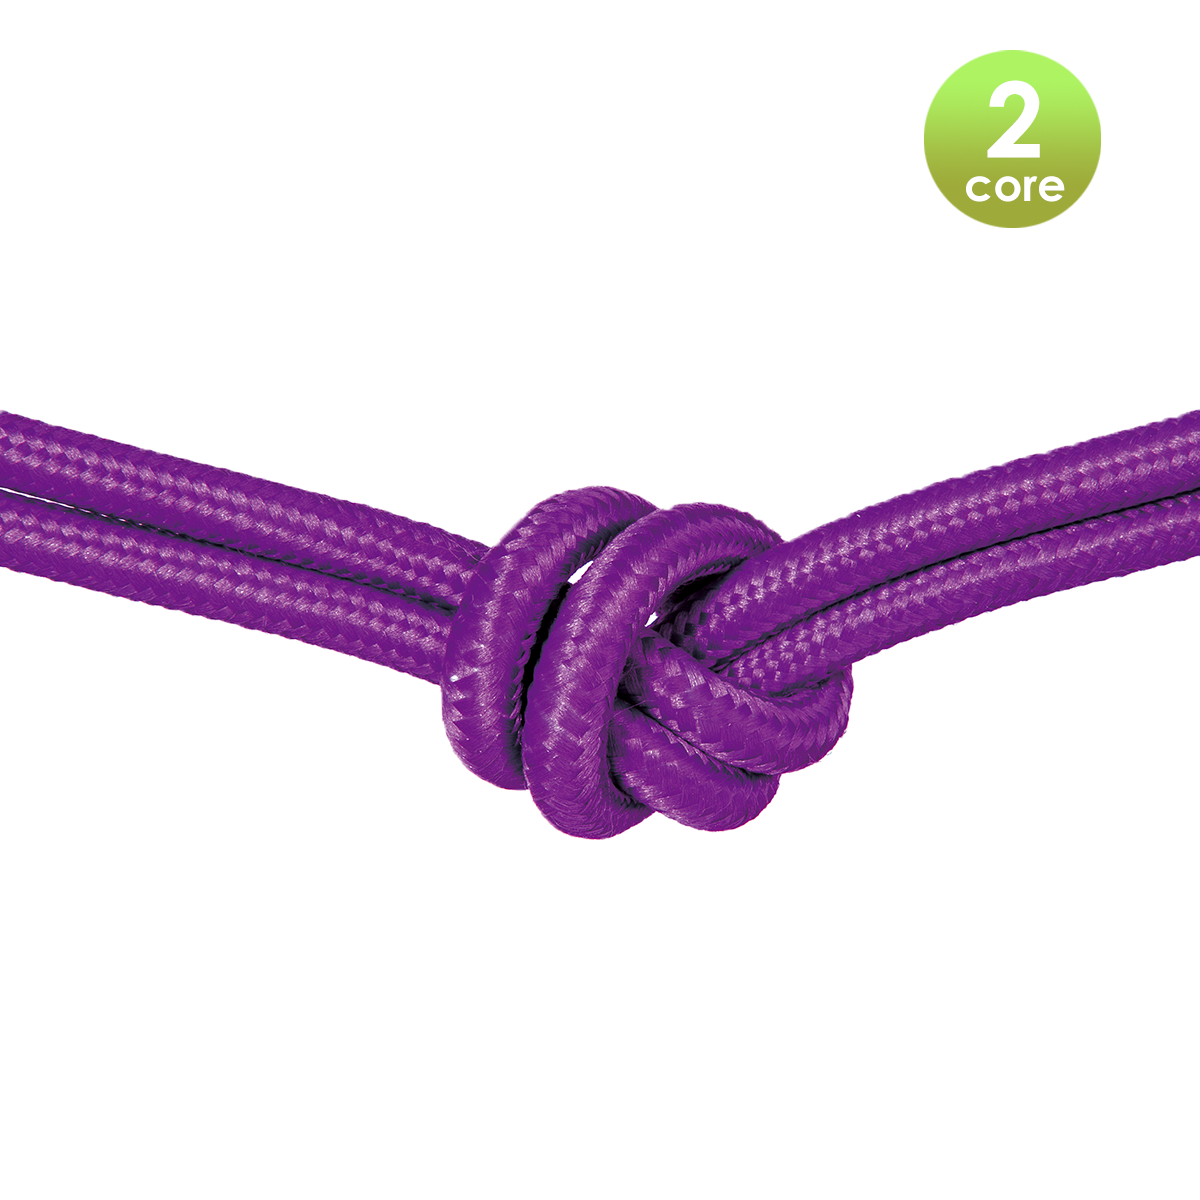 Tangla lighting - TLCB01003PP - Fabric cable 2 core - in medium purple